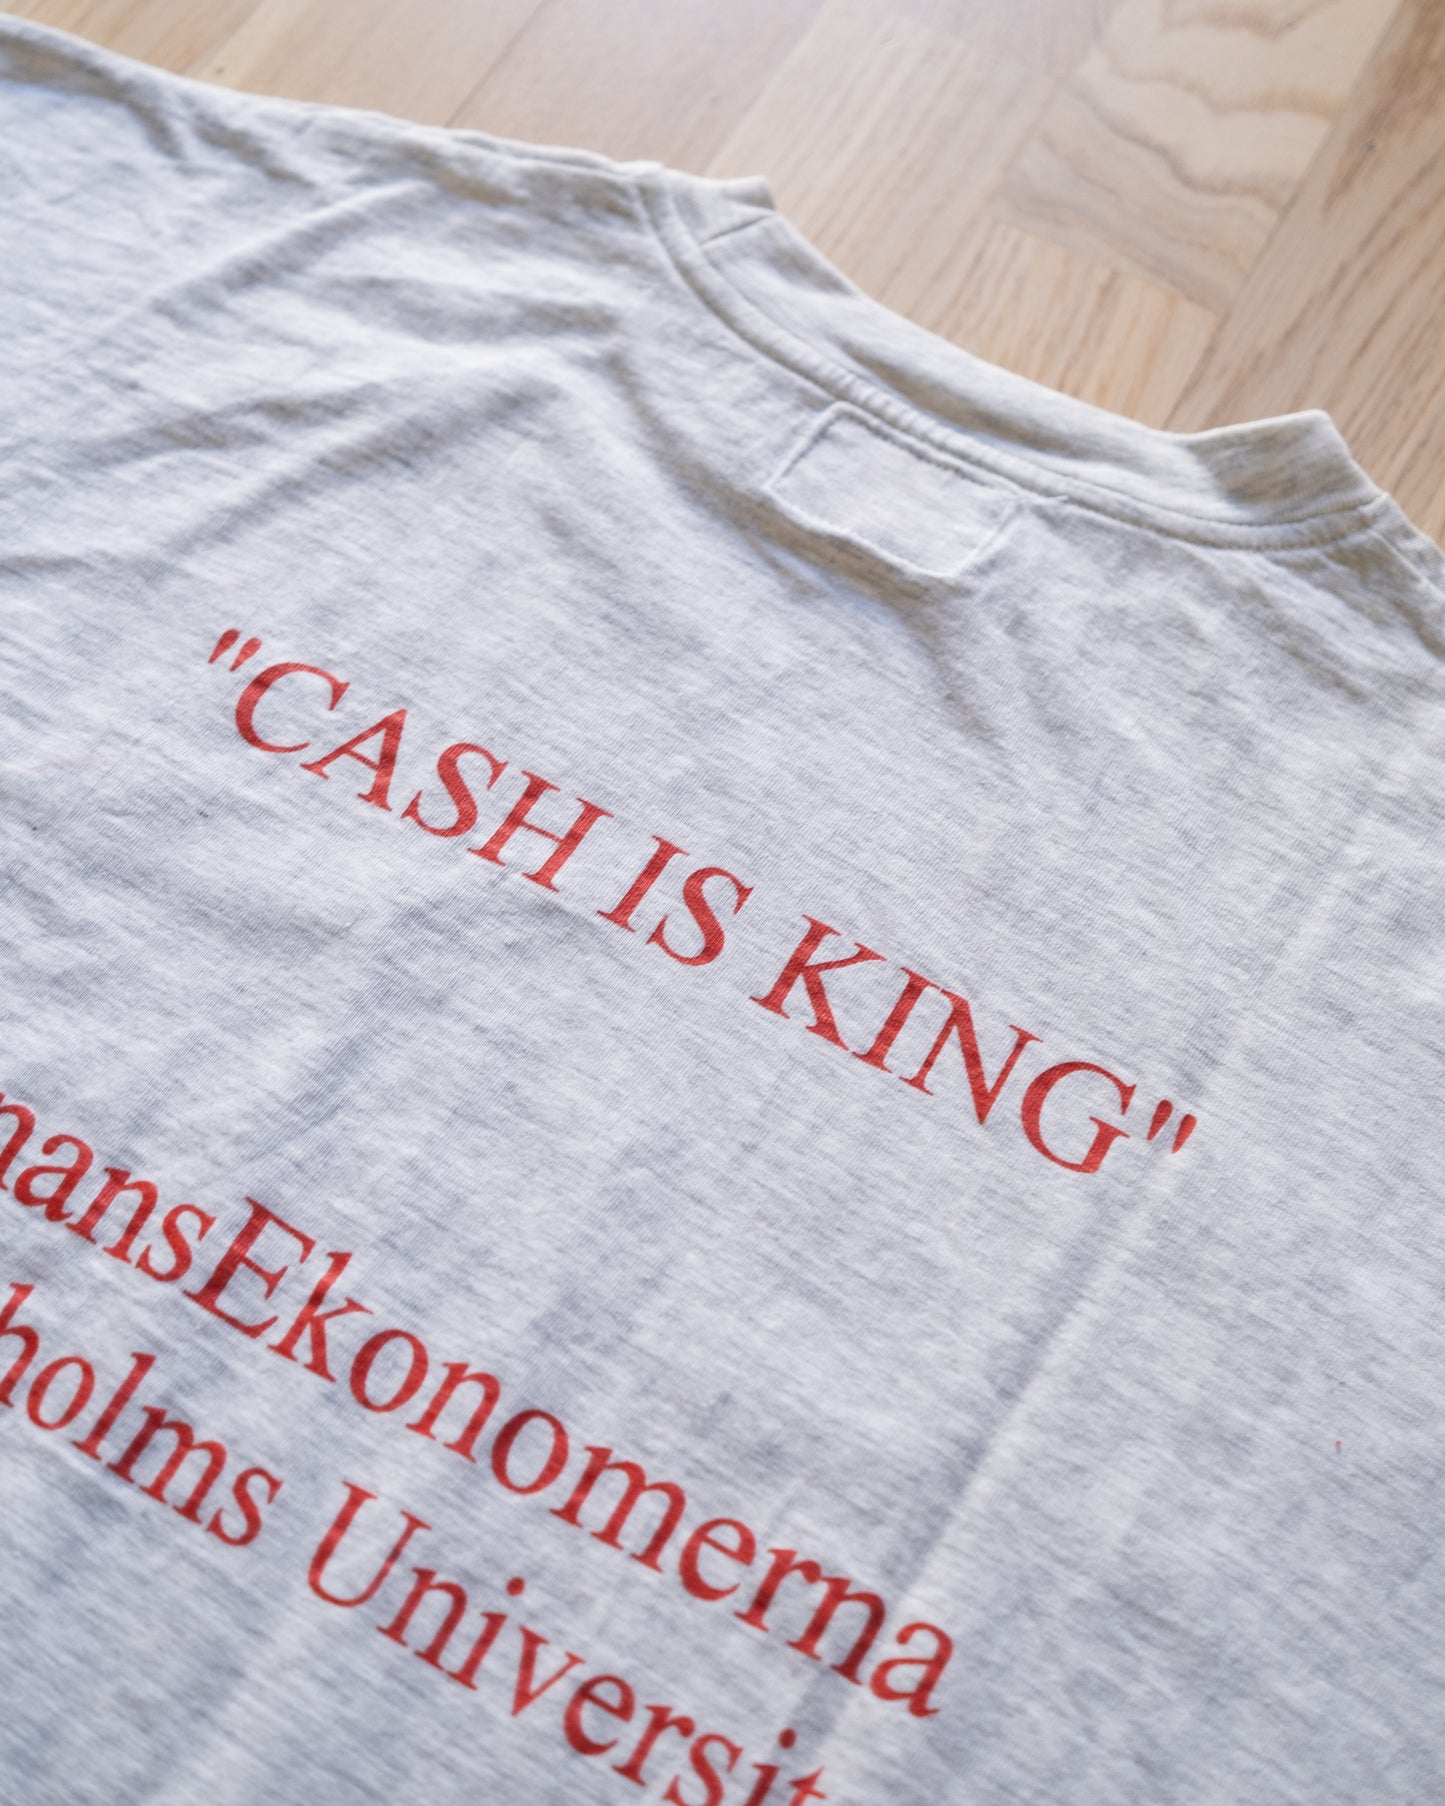 "Cash Is King" Vintage T-Shirt Size XL